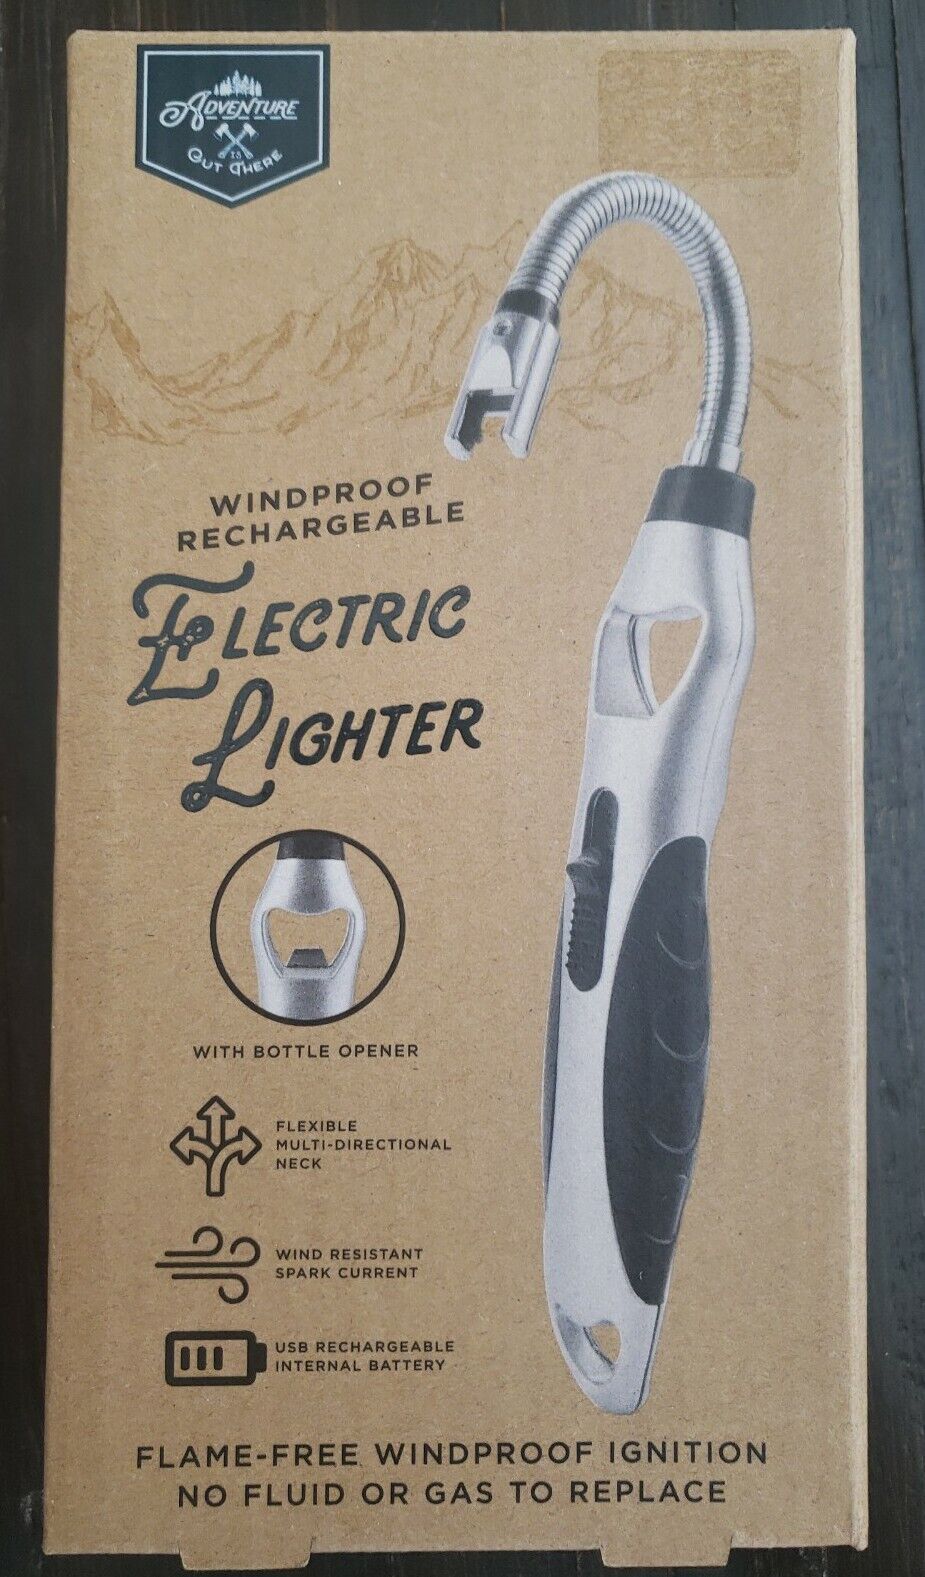 Windproof Rechargeable Electric Lighter W/ Bottle Opener Flexible USB Battery